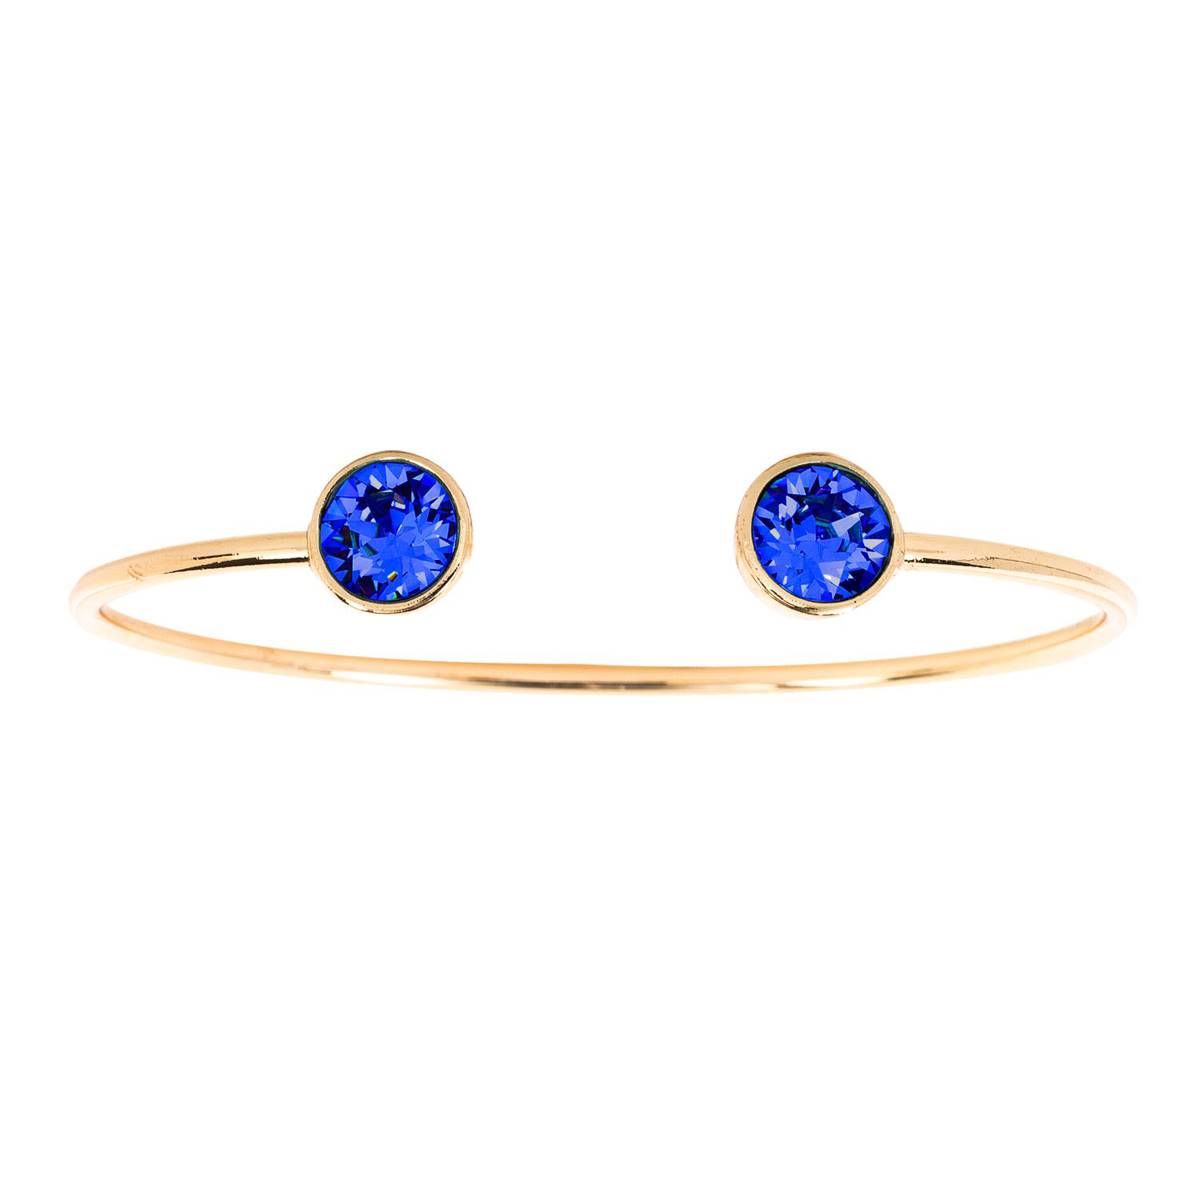 Gold Plated Blue Sapphire Austrian Crystal Cuff Bangle Bracelet